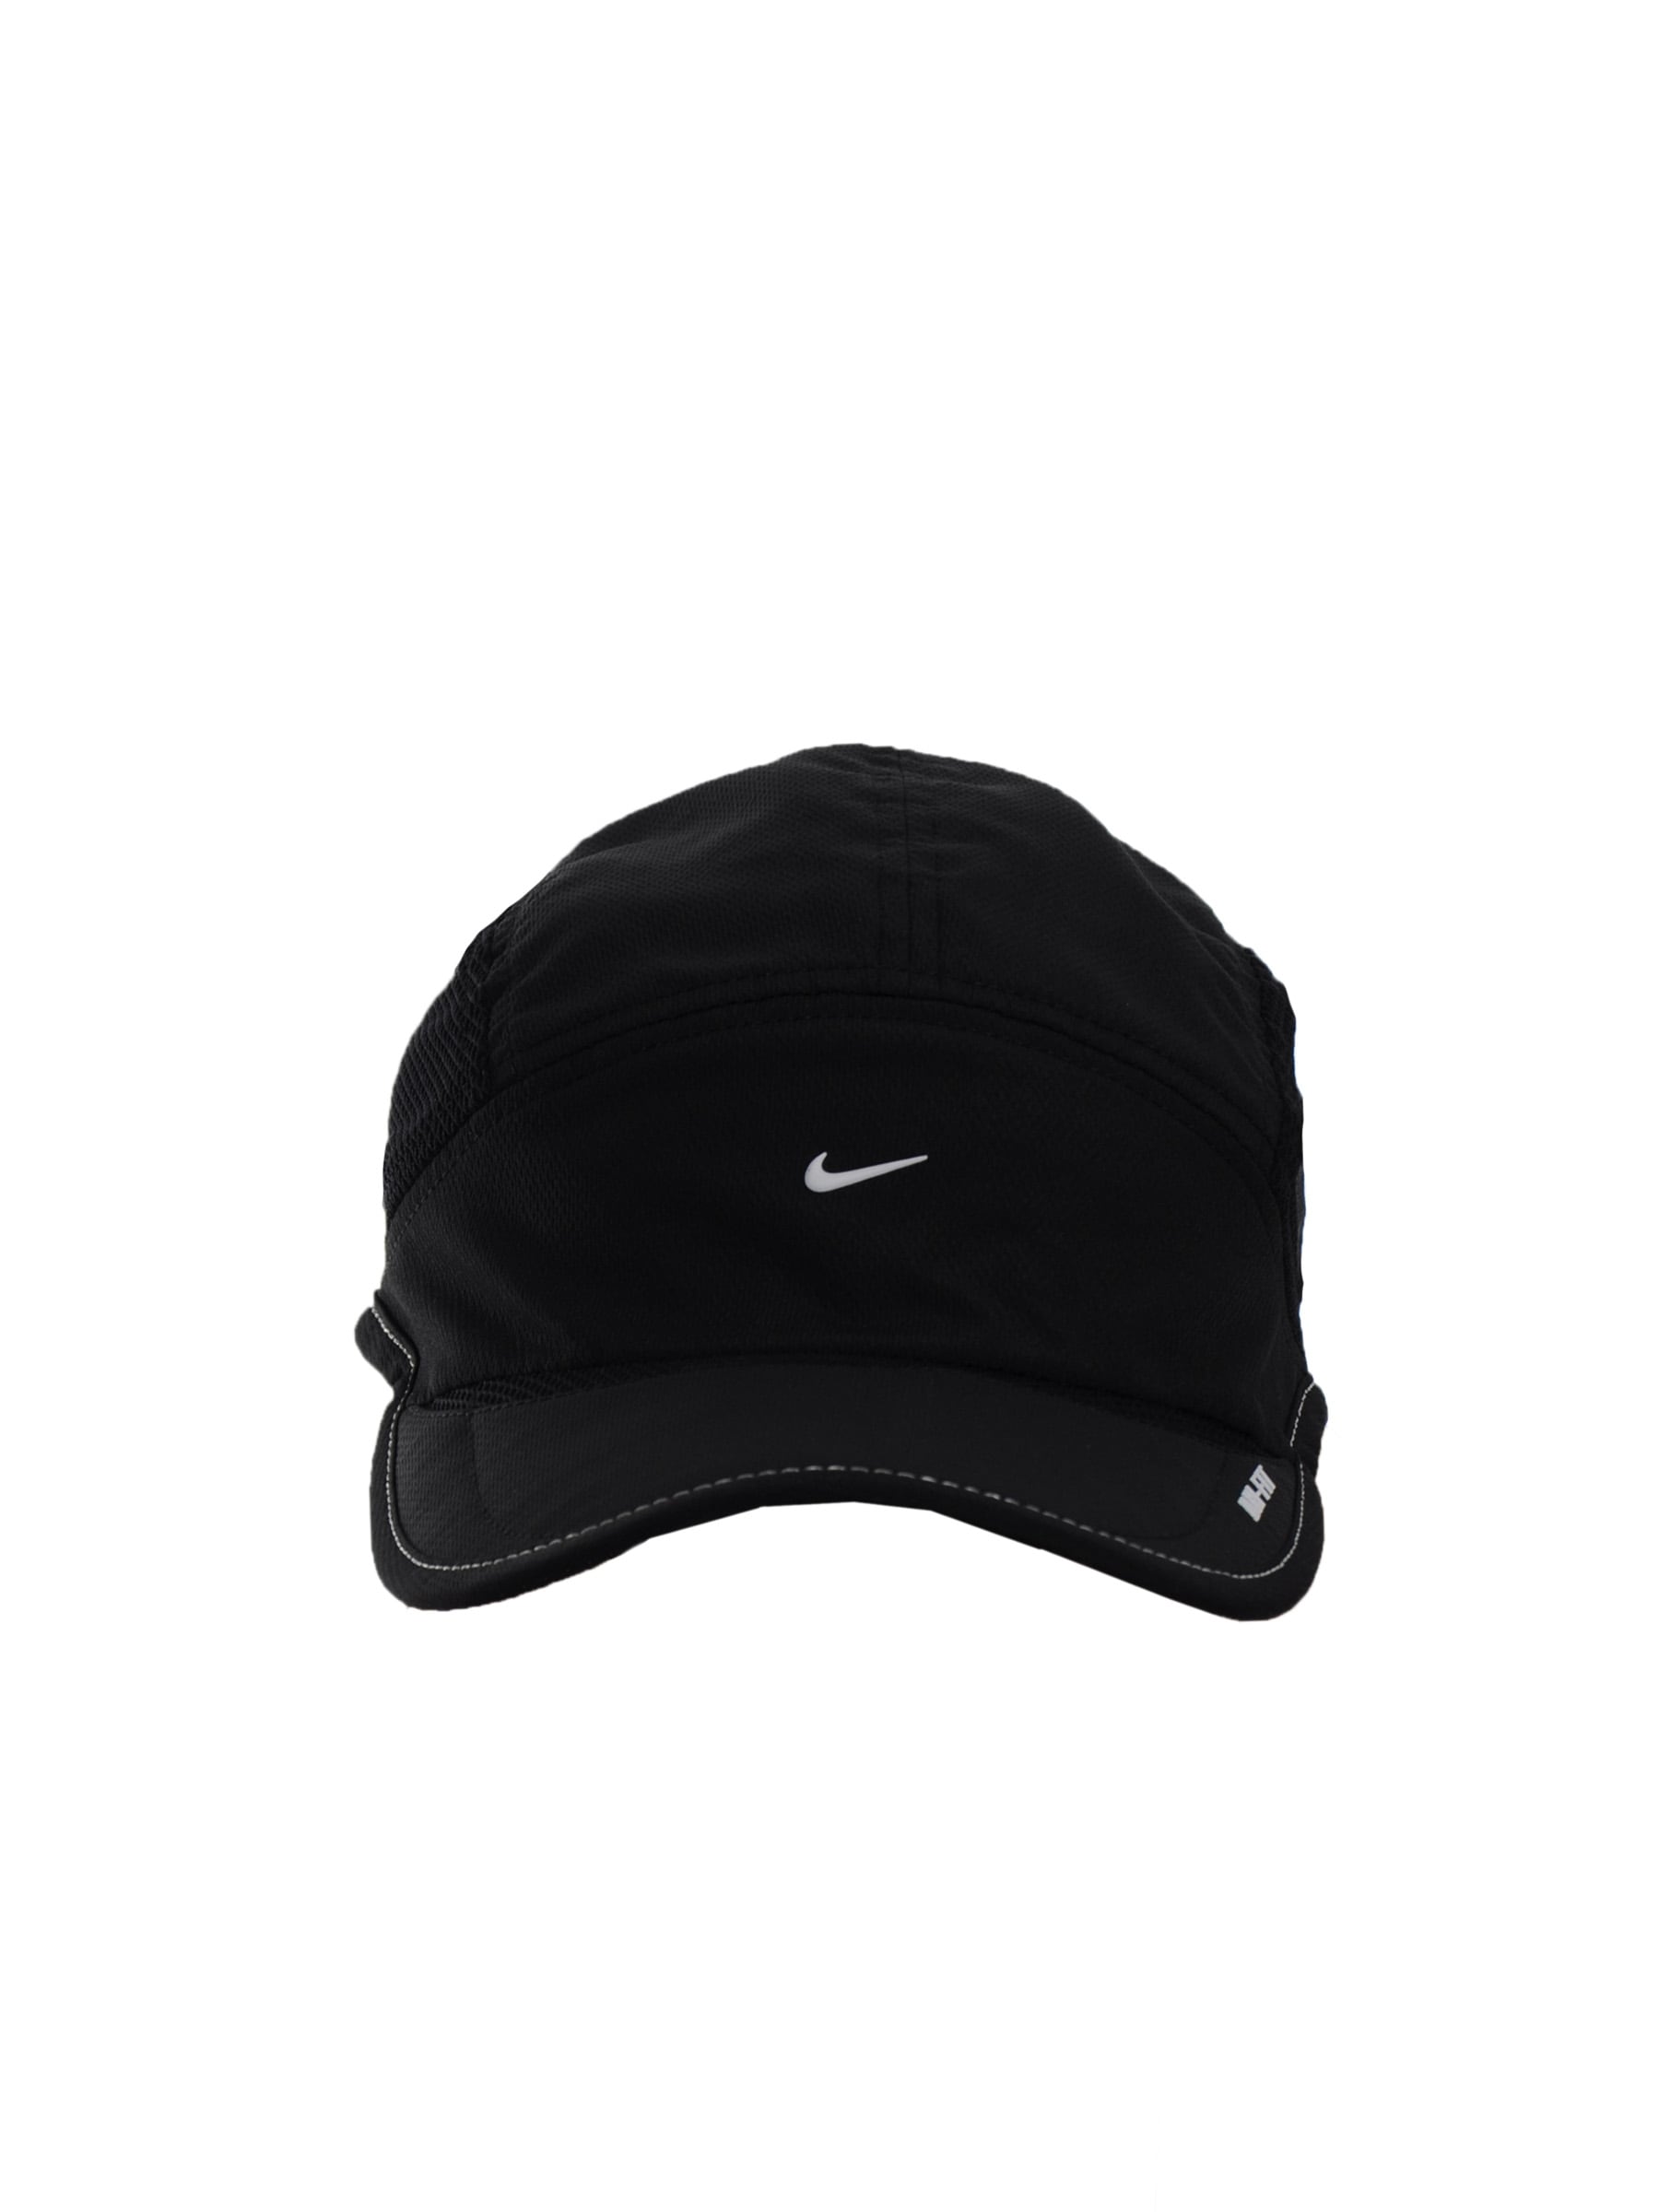 Nike Unisex Runng Black Caps